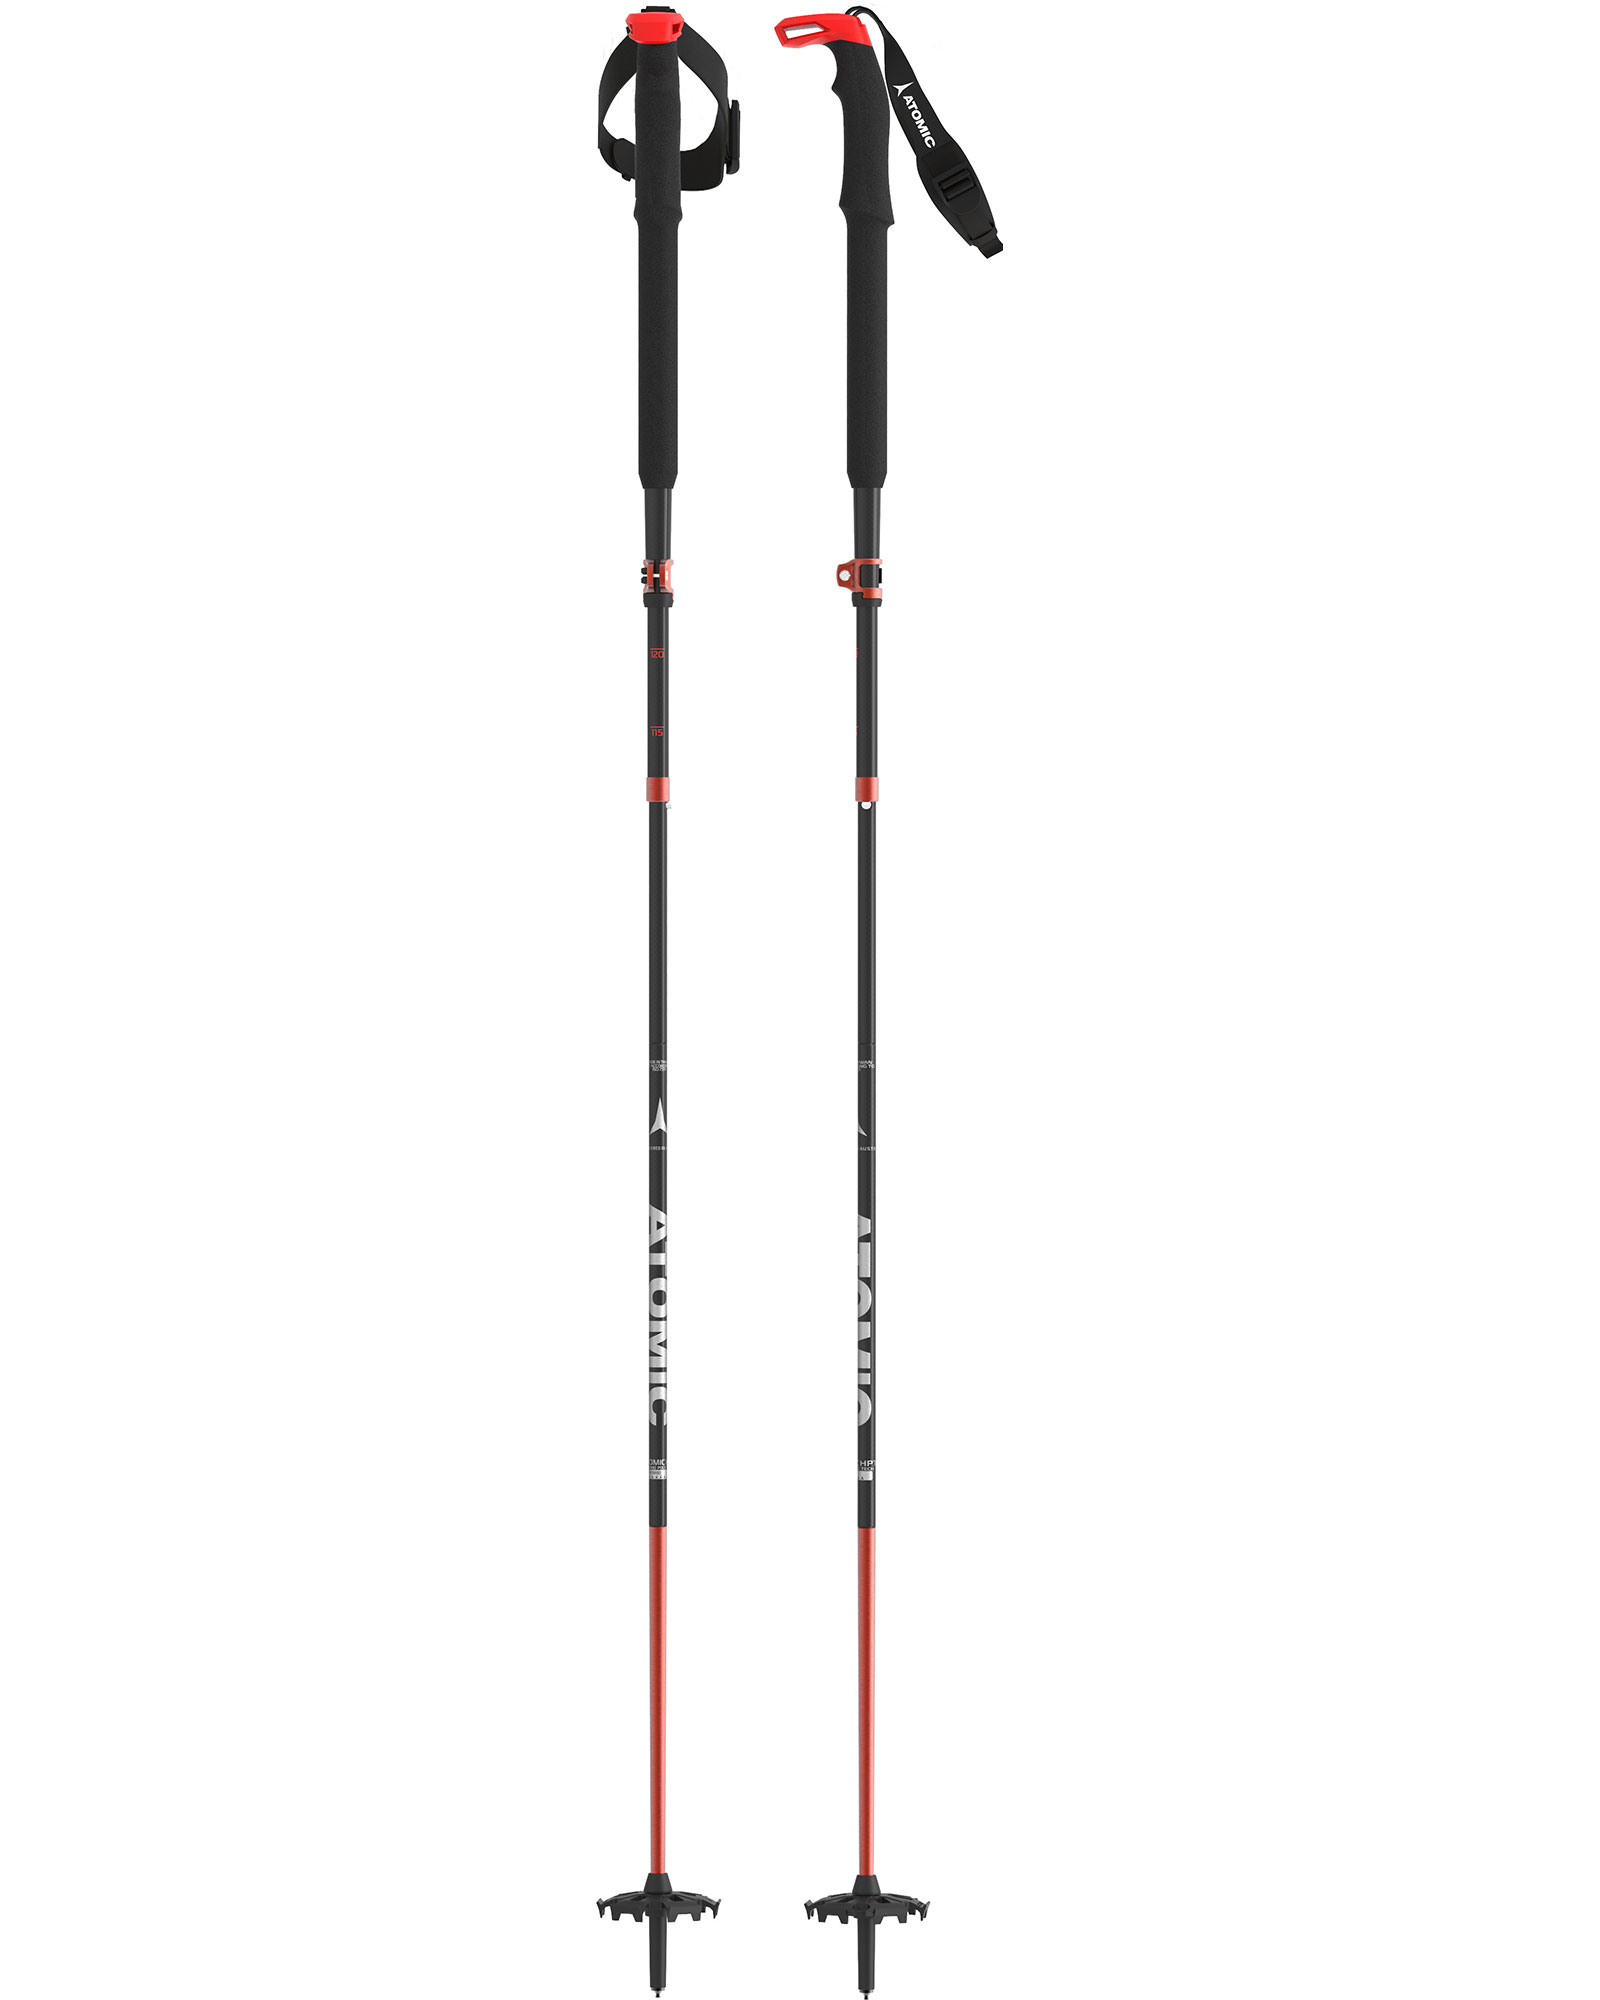 Atomic Bct Mountaineering Carbon Sqs Ski Poles